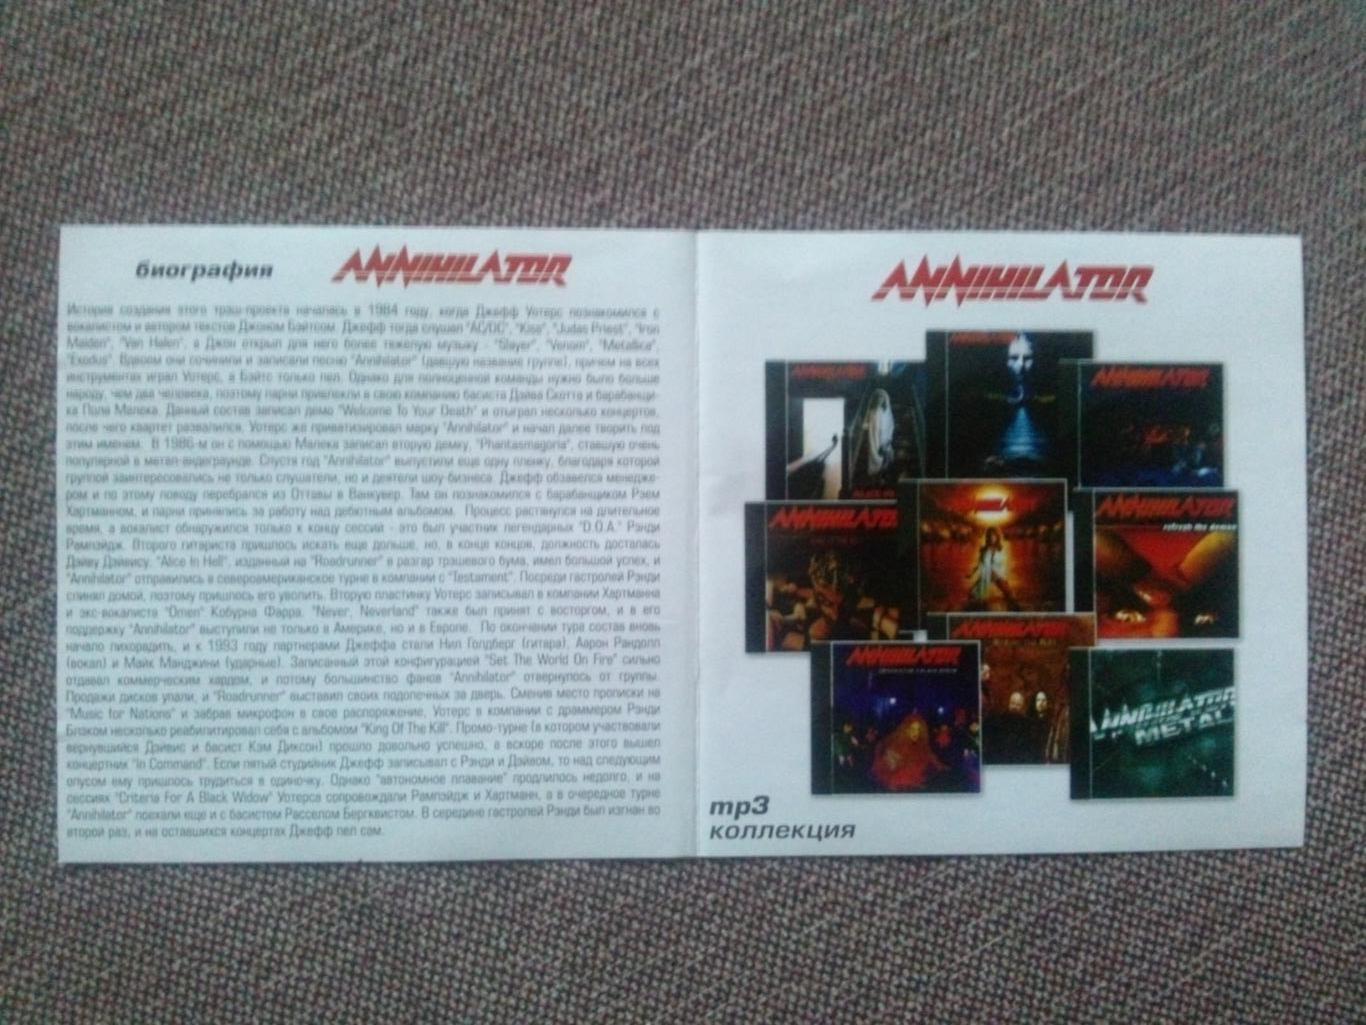 MP - 3 CD : группа Annihilator 1989 - 2007 гг. (13 альбомов) Thrash metal Рок 2